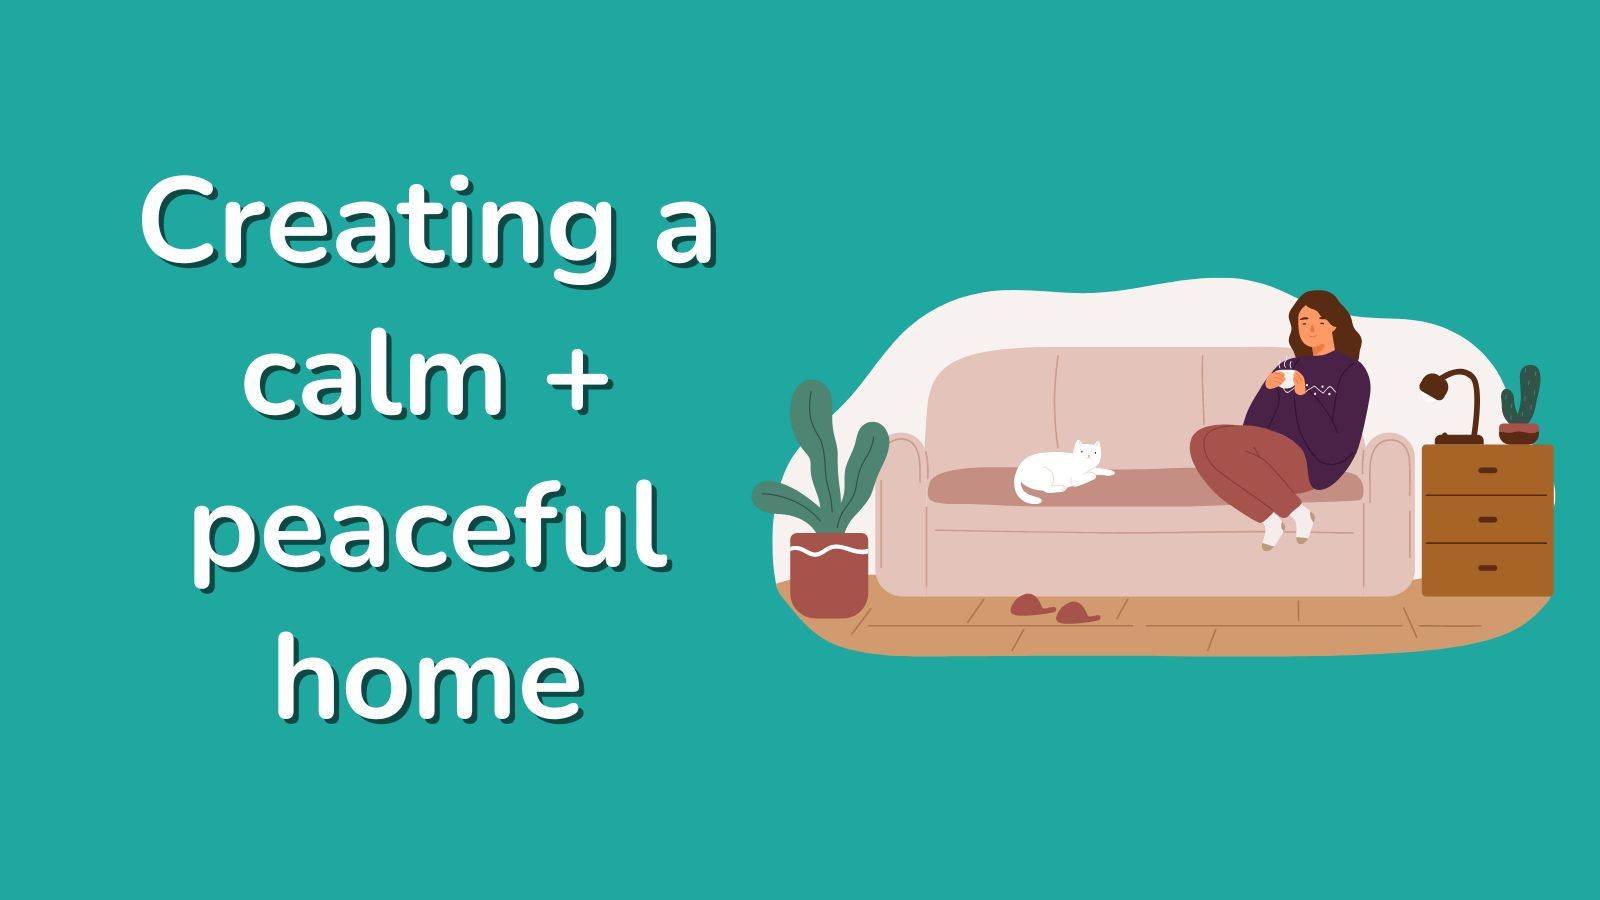 Creating a calm + peaceful home